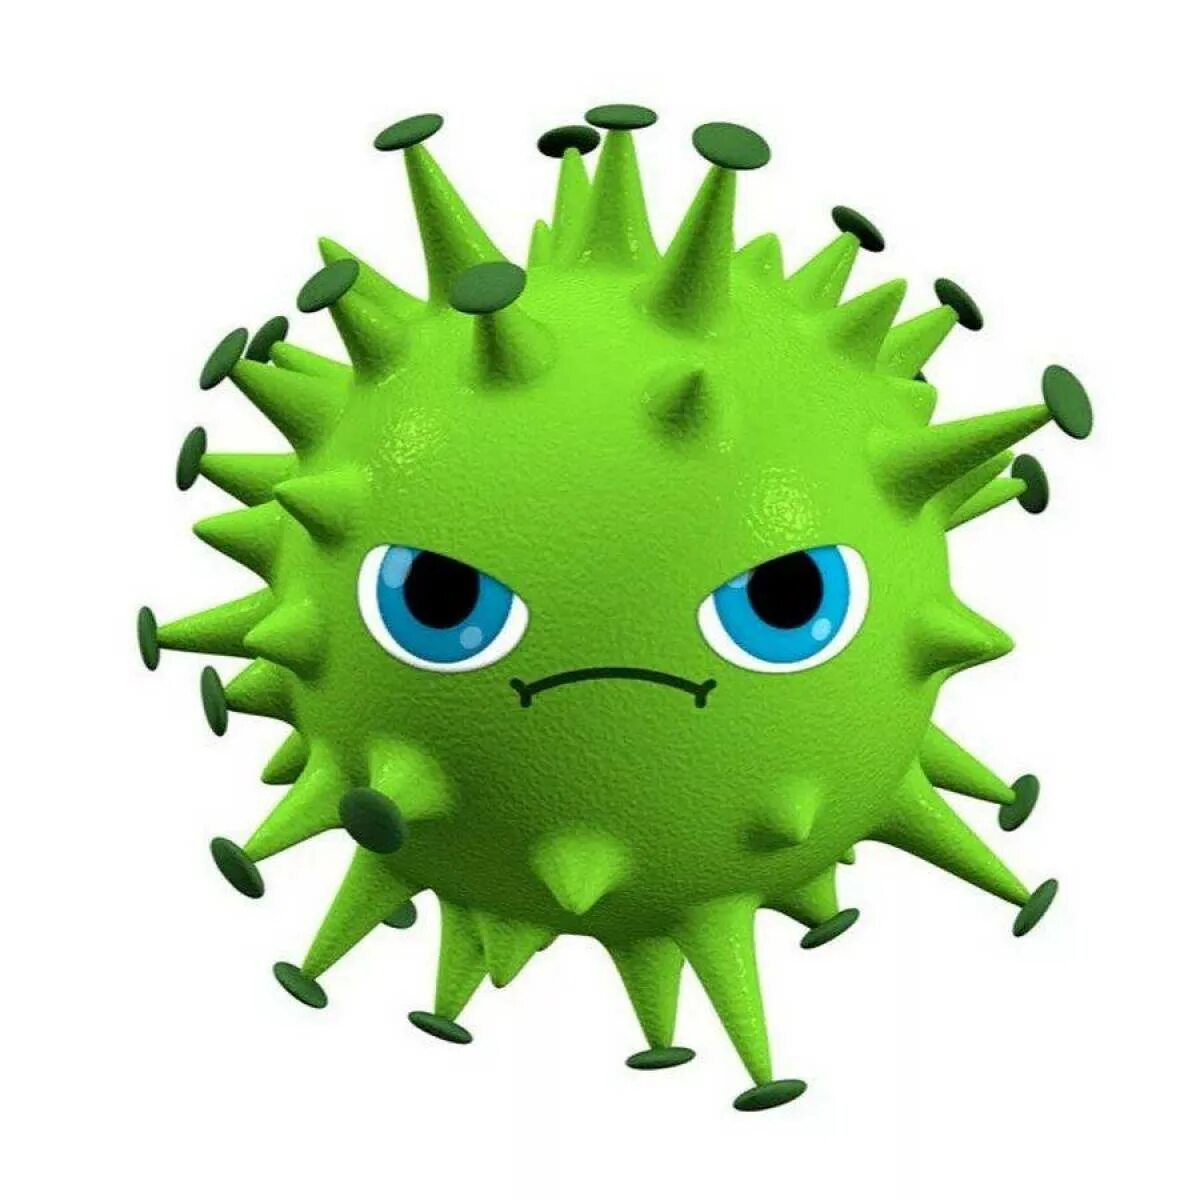 Вирус вирус коронавирус. Микробы ковид 19. Коронавирус микробы микробы. Микробы вирусы бактерии для детей. Картинка вируса для детей